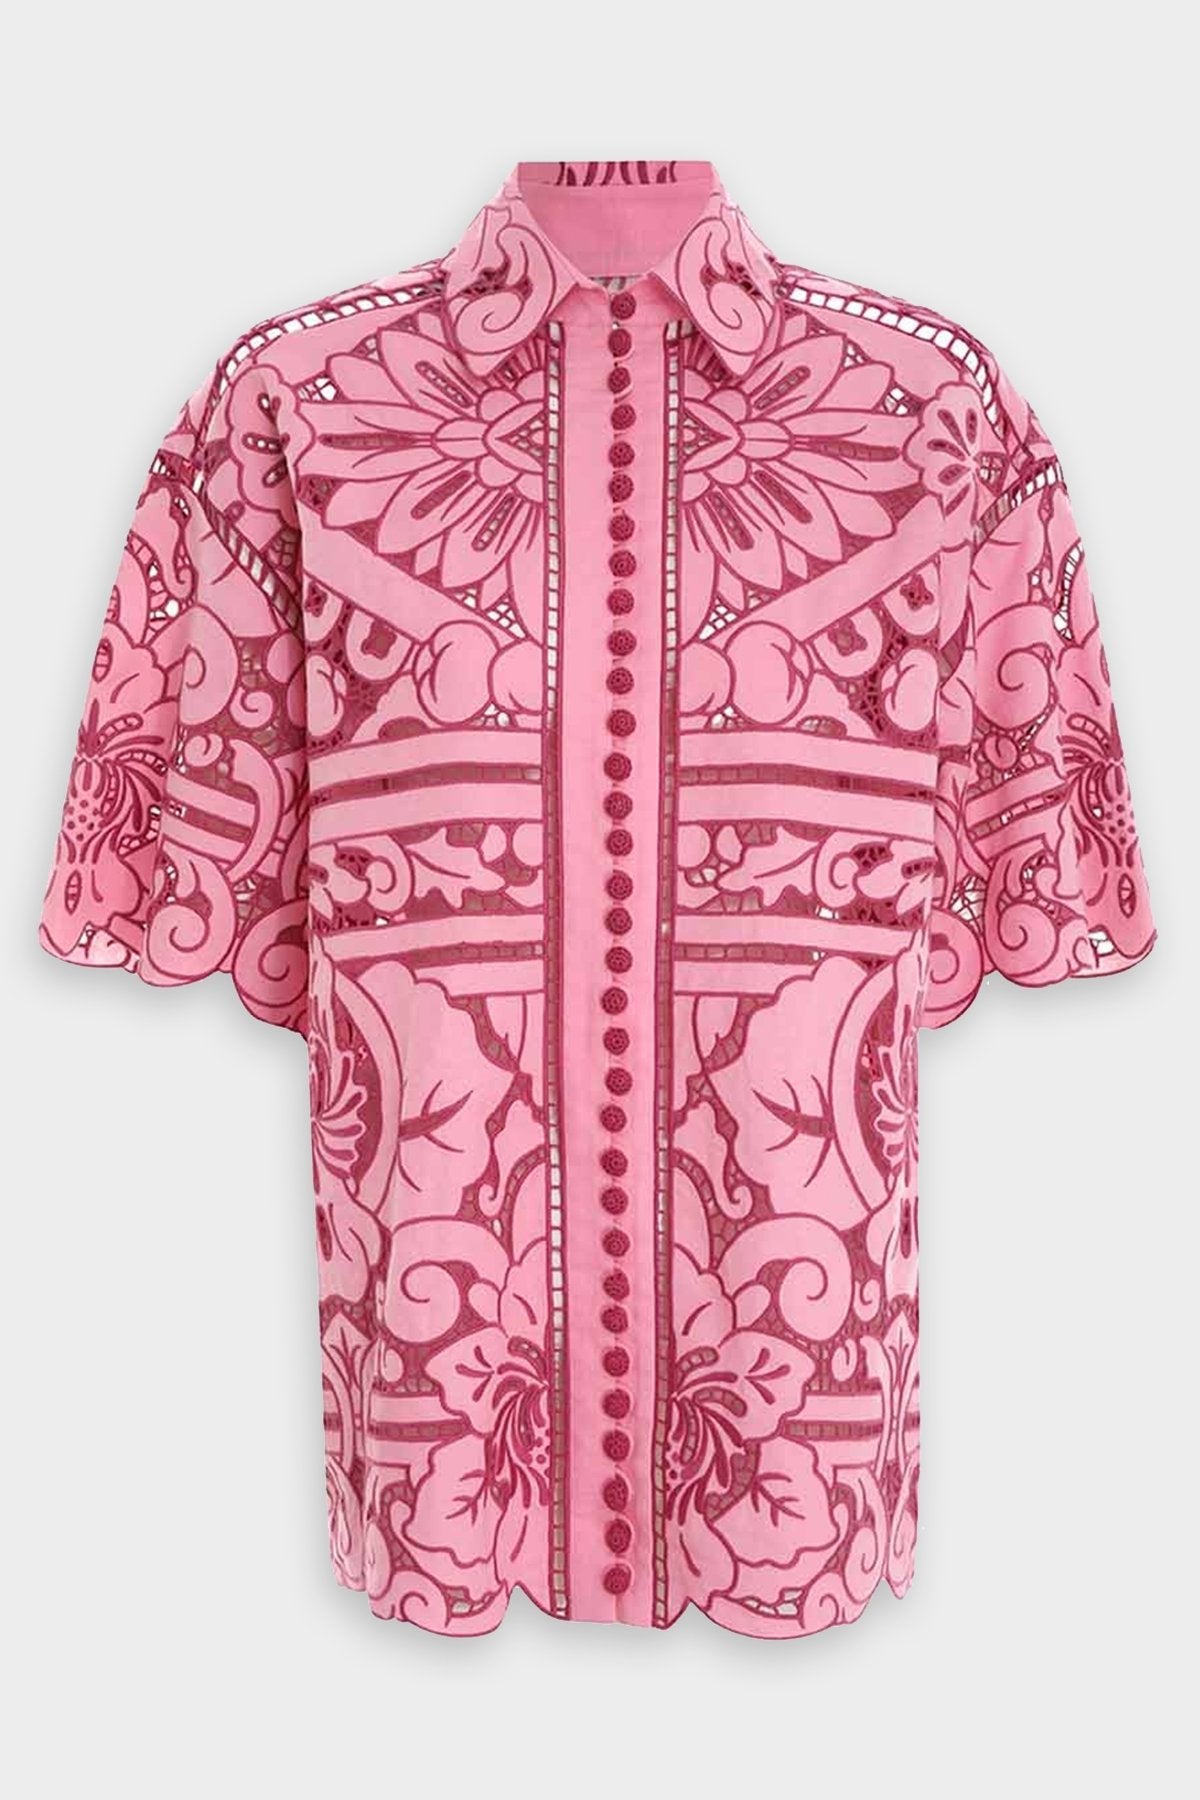 Jude Embroidered Shirt in Pink Burgundy - shop-olivia.com